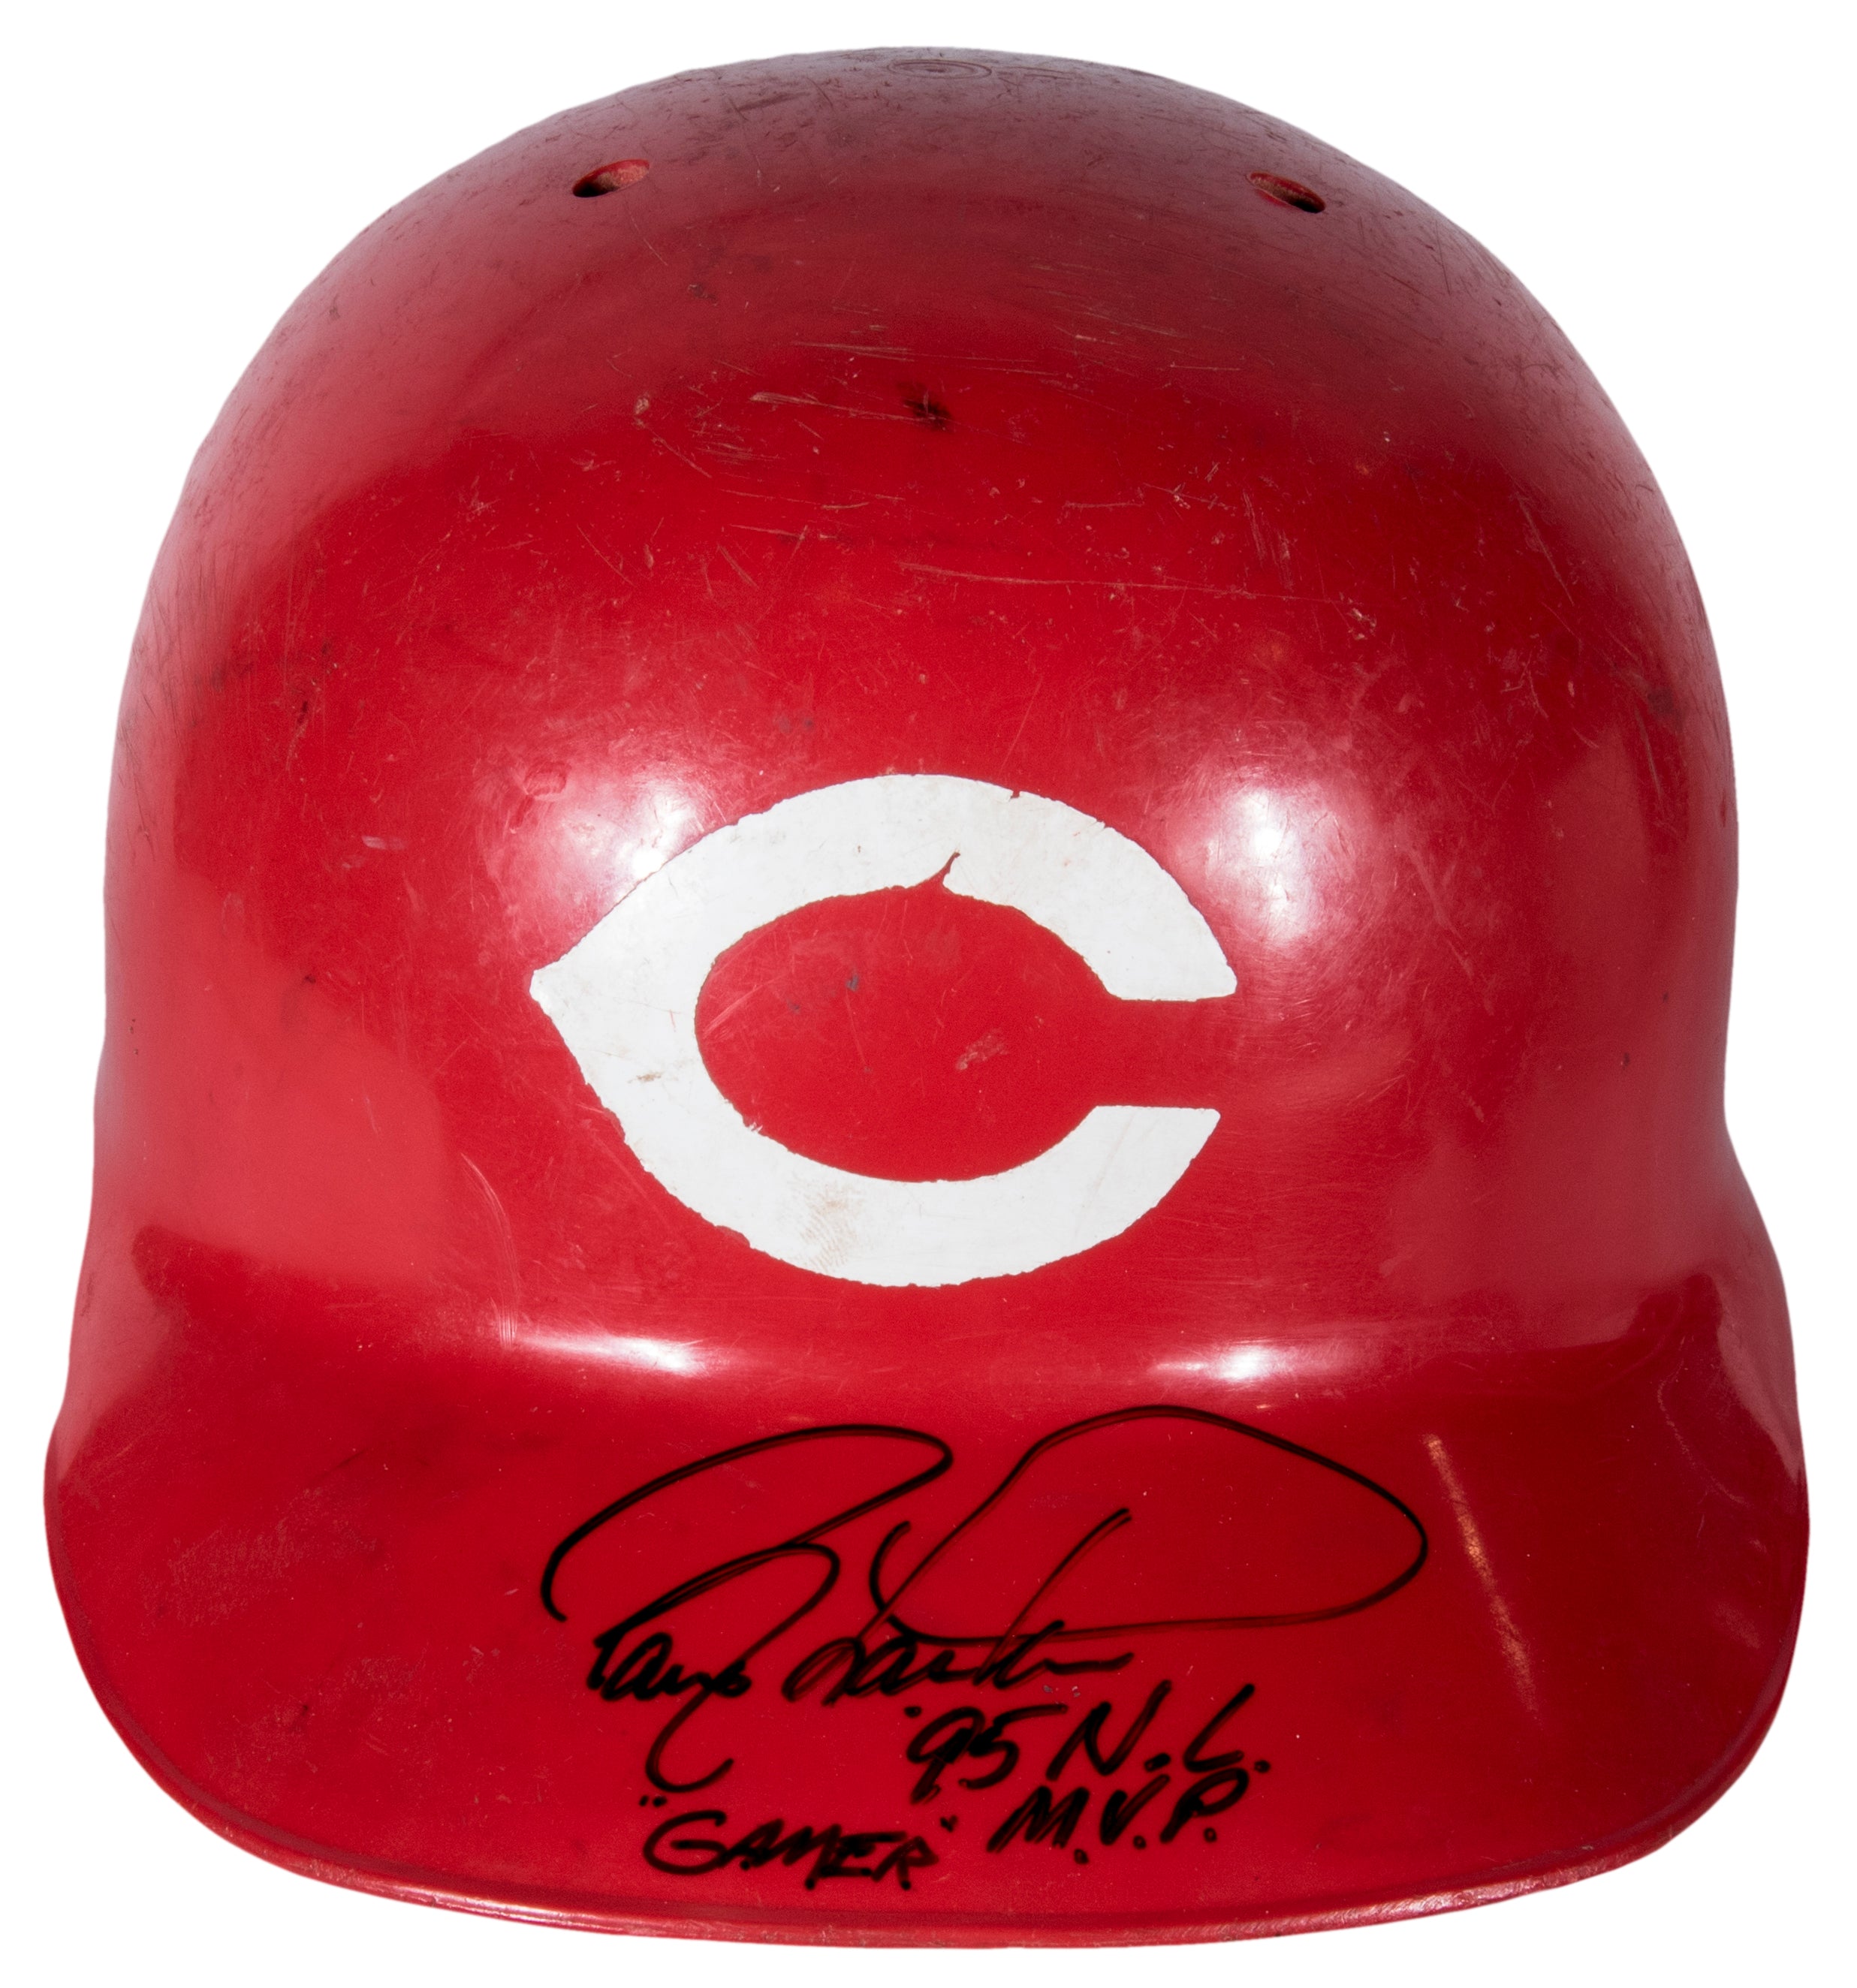  Barry Larkin Cincinnati Reds Game Used Batting Helmet 1997 Reds  LOA Signed - MLB Game Used Helmets : Collectibles & Fine Art